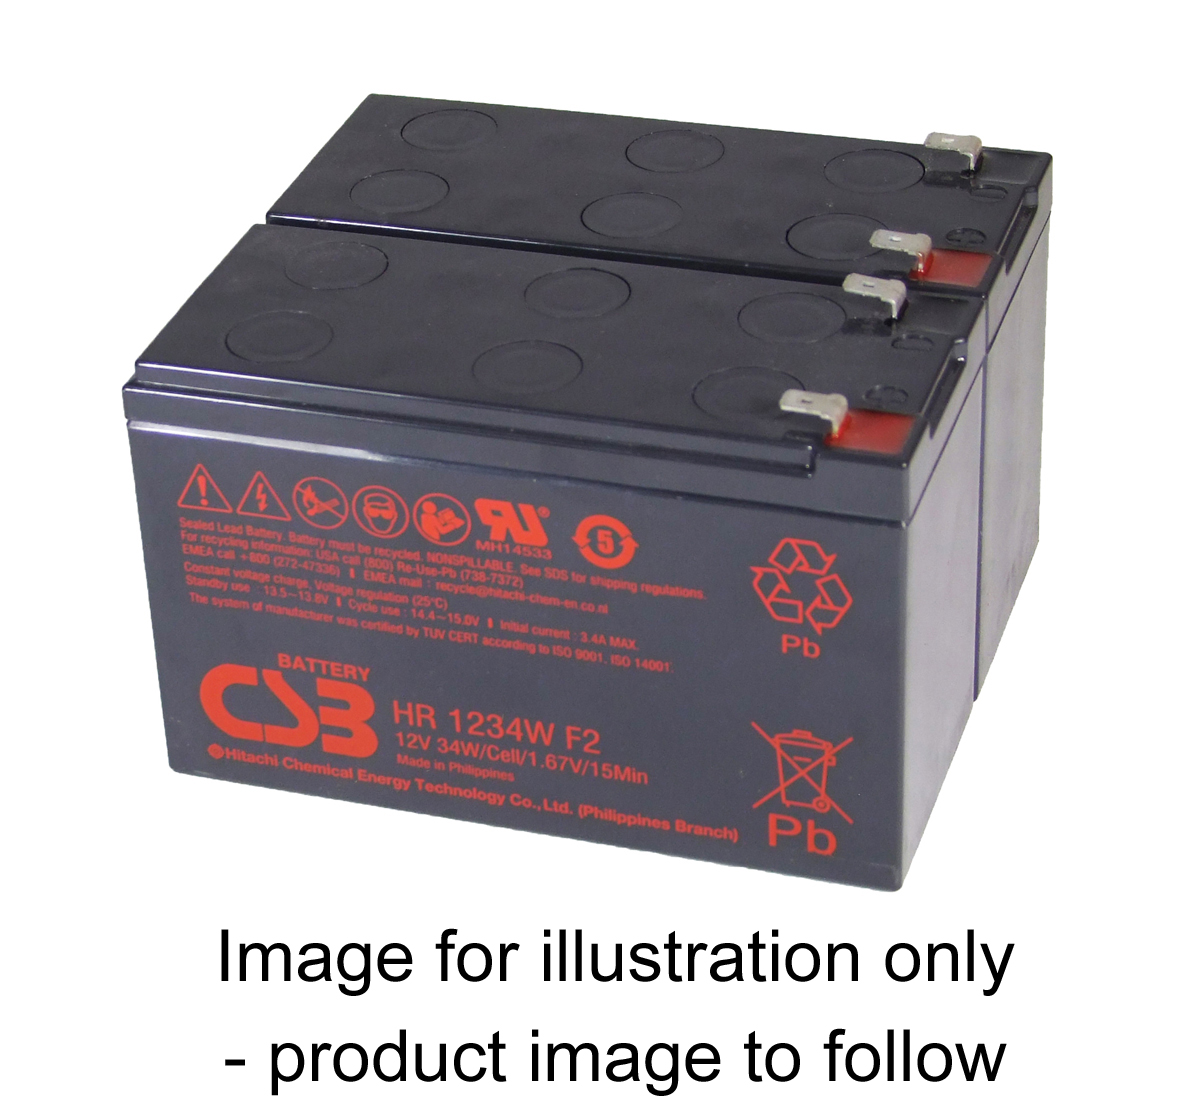 MDSV201 UPS Battery Kit - Replaces APC RBCV201